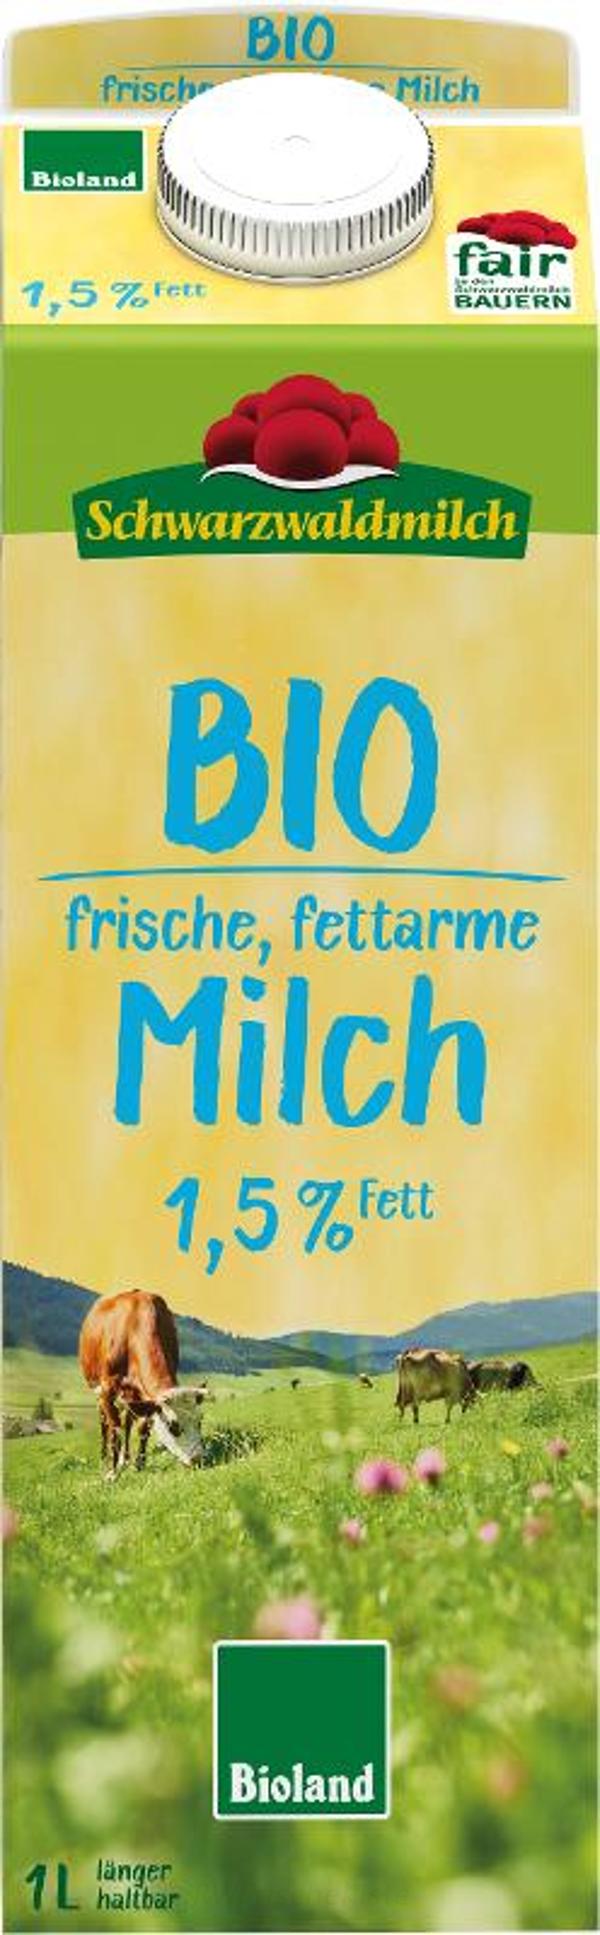 Produktfoto zu Schwarzwaldmilch 1,5% Tetra